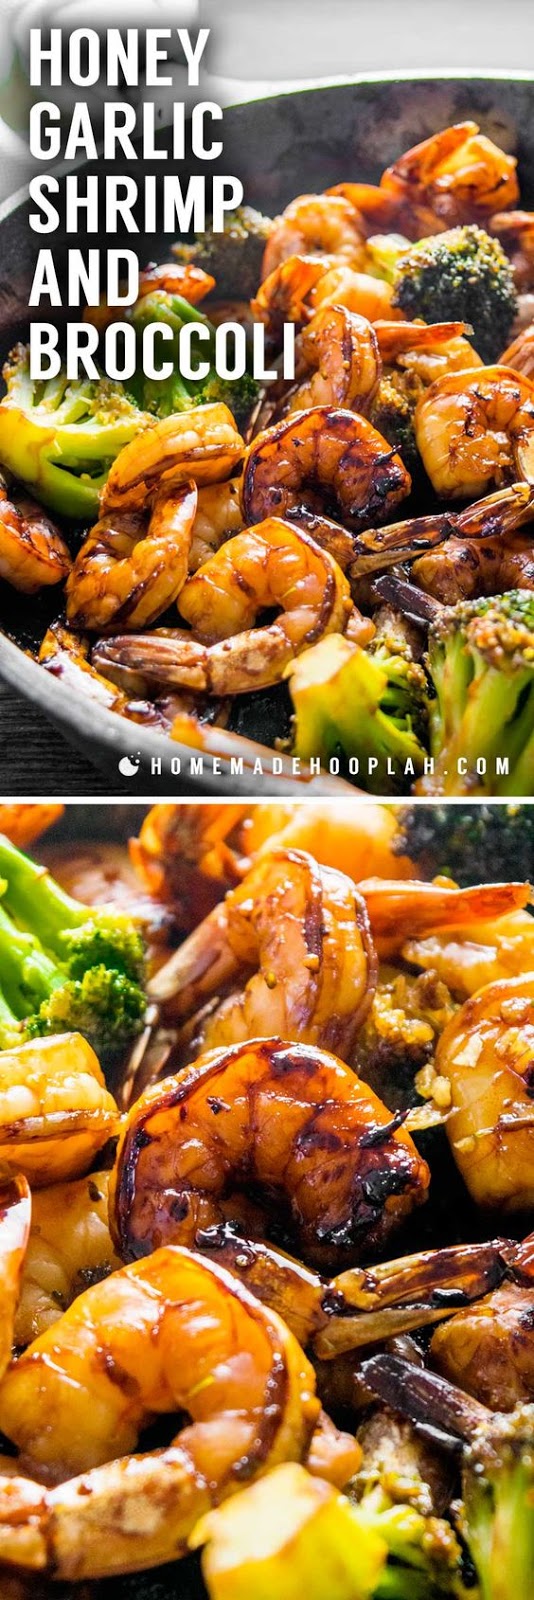 Honey Garlic Shrimp and Broccoli! - News Healthy Vegan Recipes